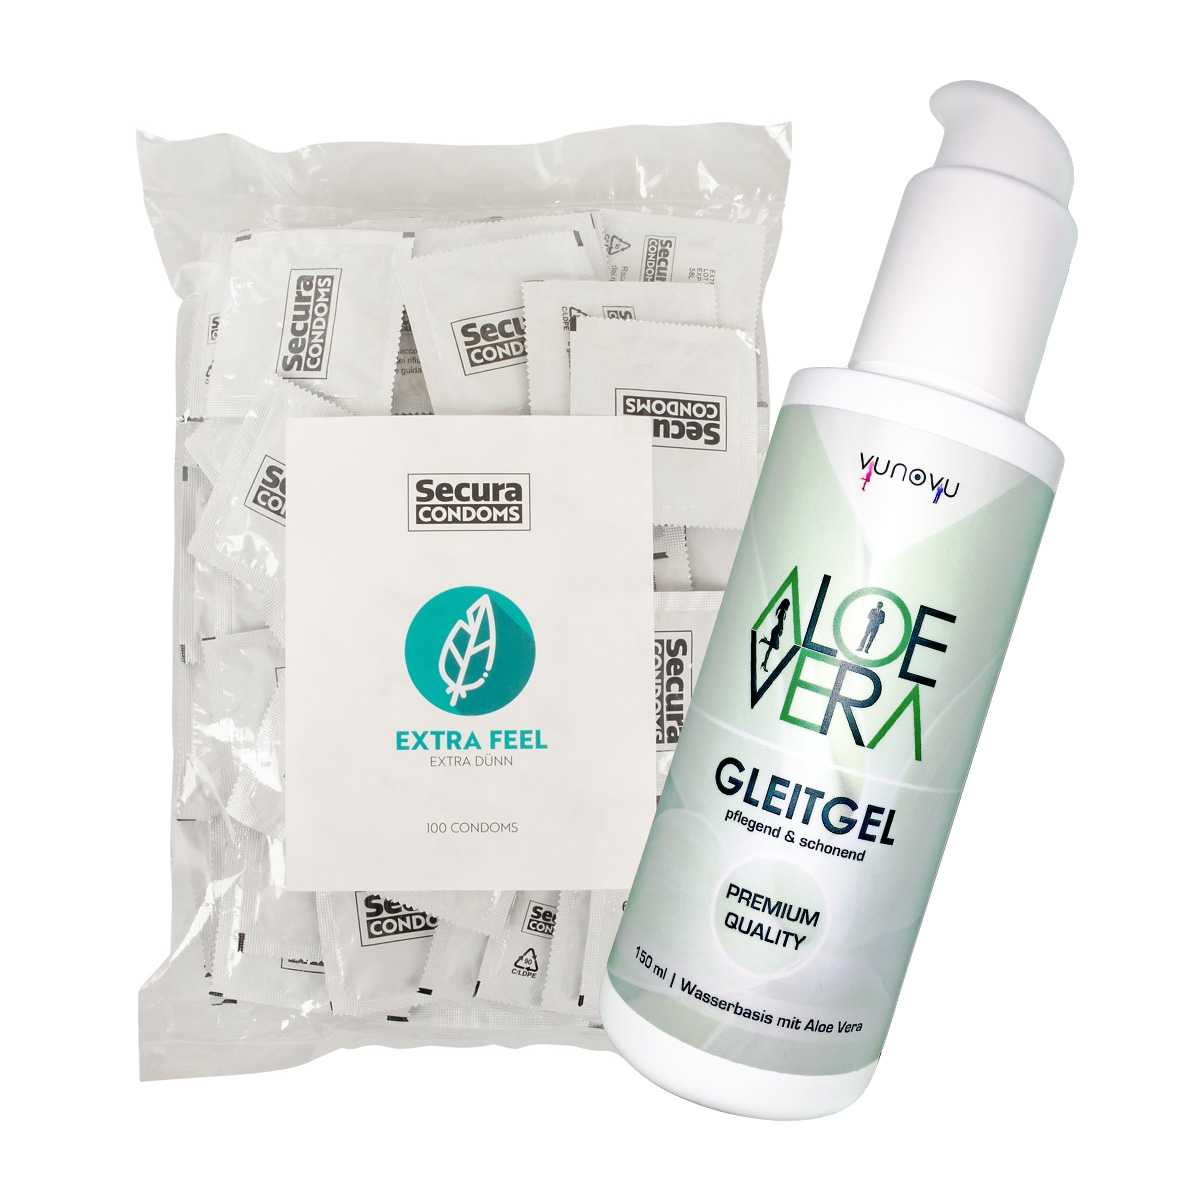 Secura Extra Feel 100 Kondome + Aloe Vera Gleitgel pflegend & schonend 150 ml